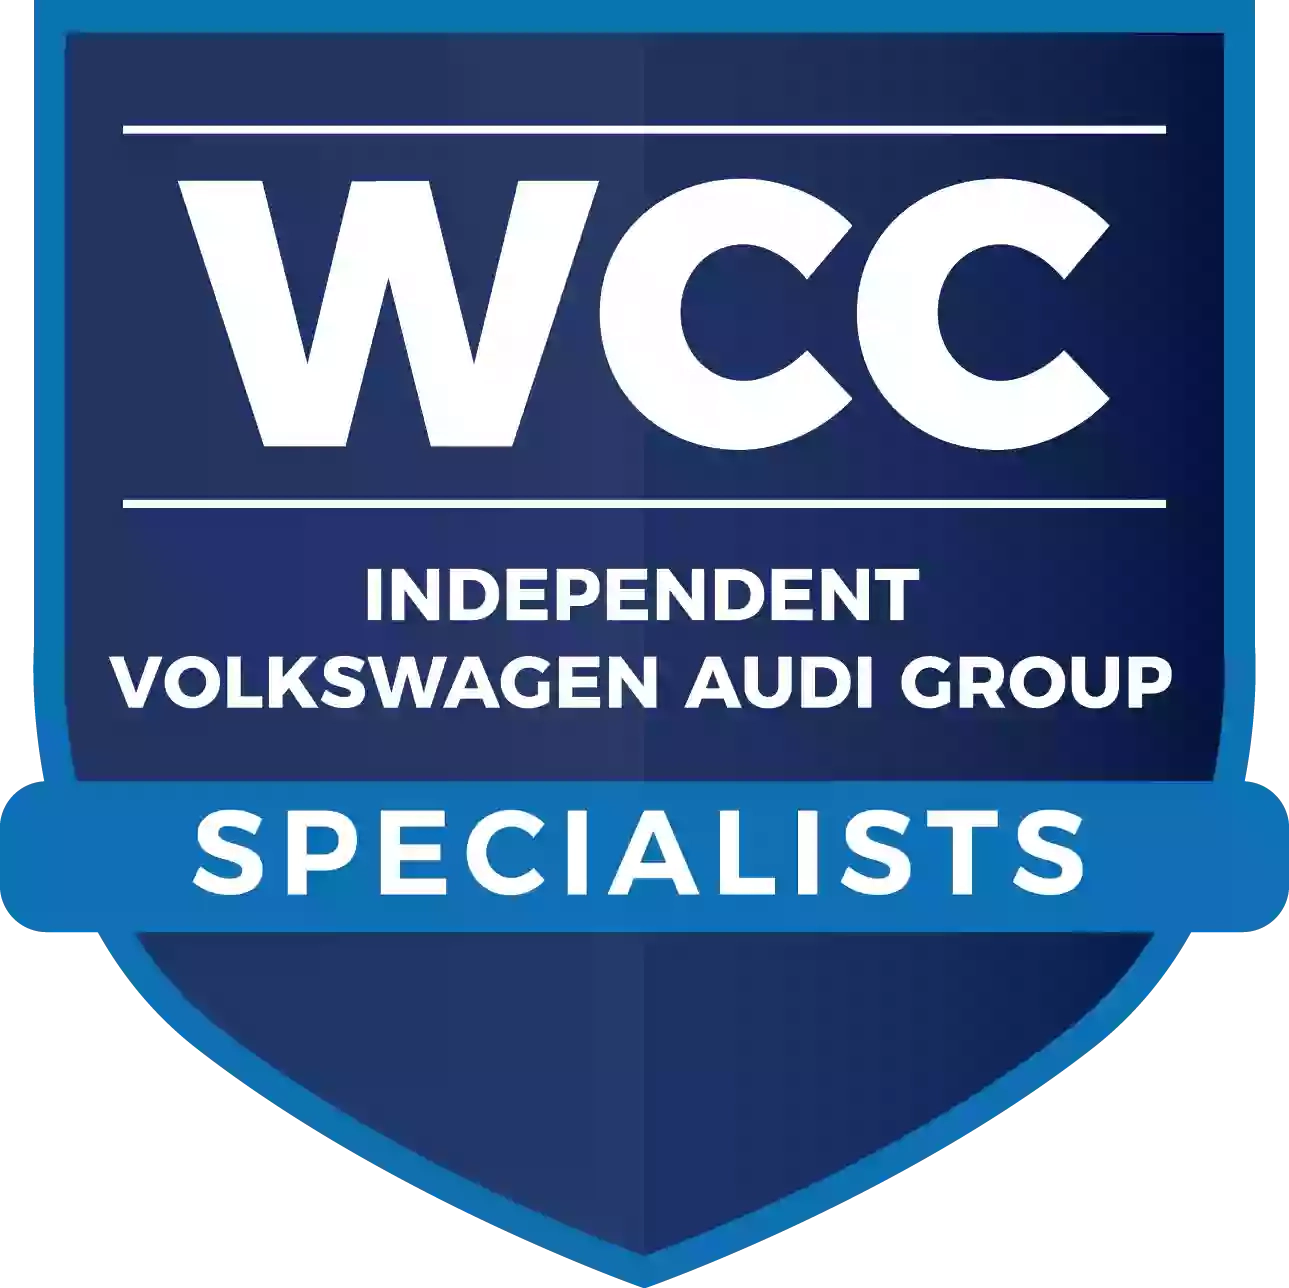 WCC Independent Volkswagen Audi Group Specialists